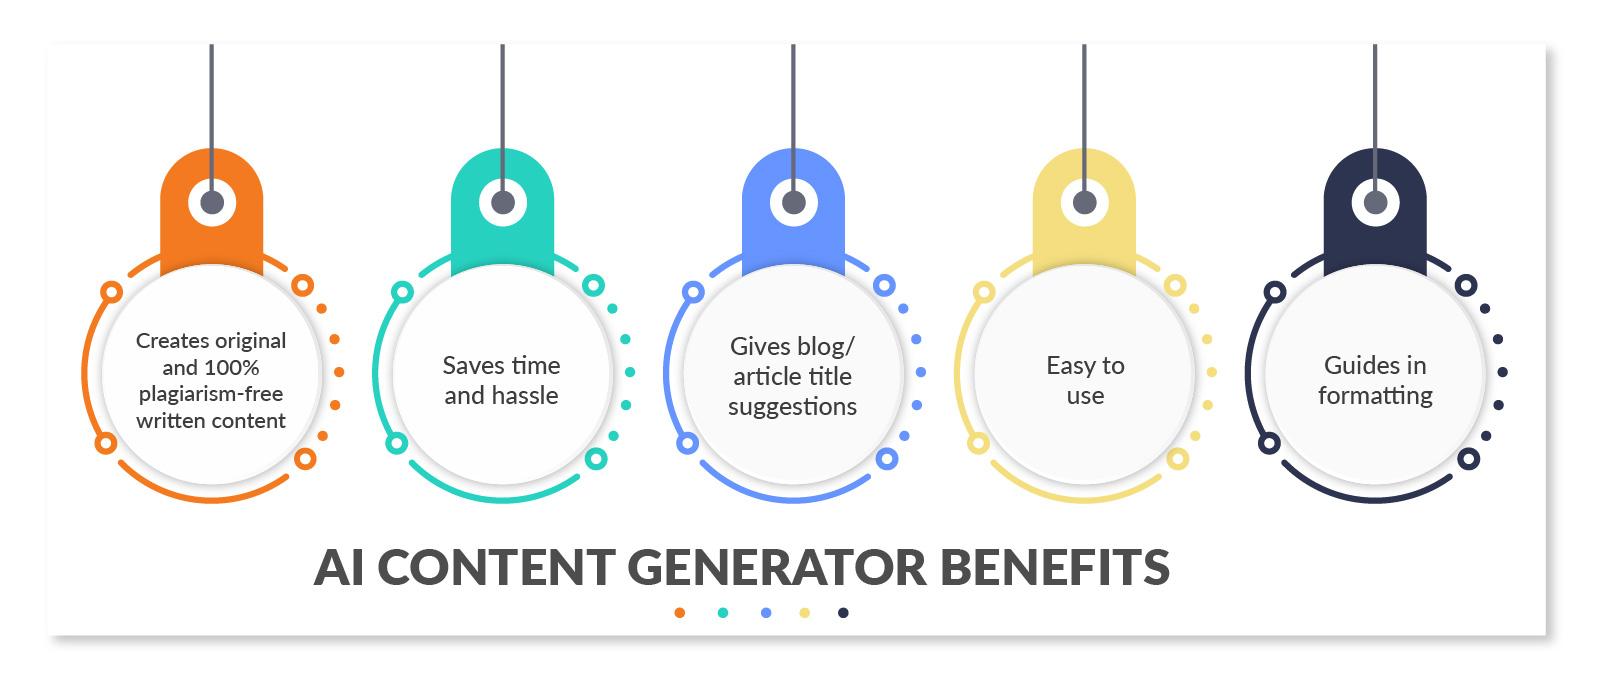 Benefits of AI content generator 